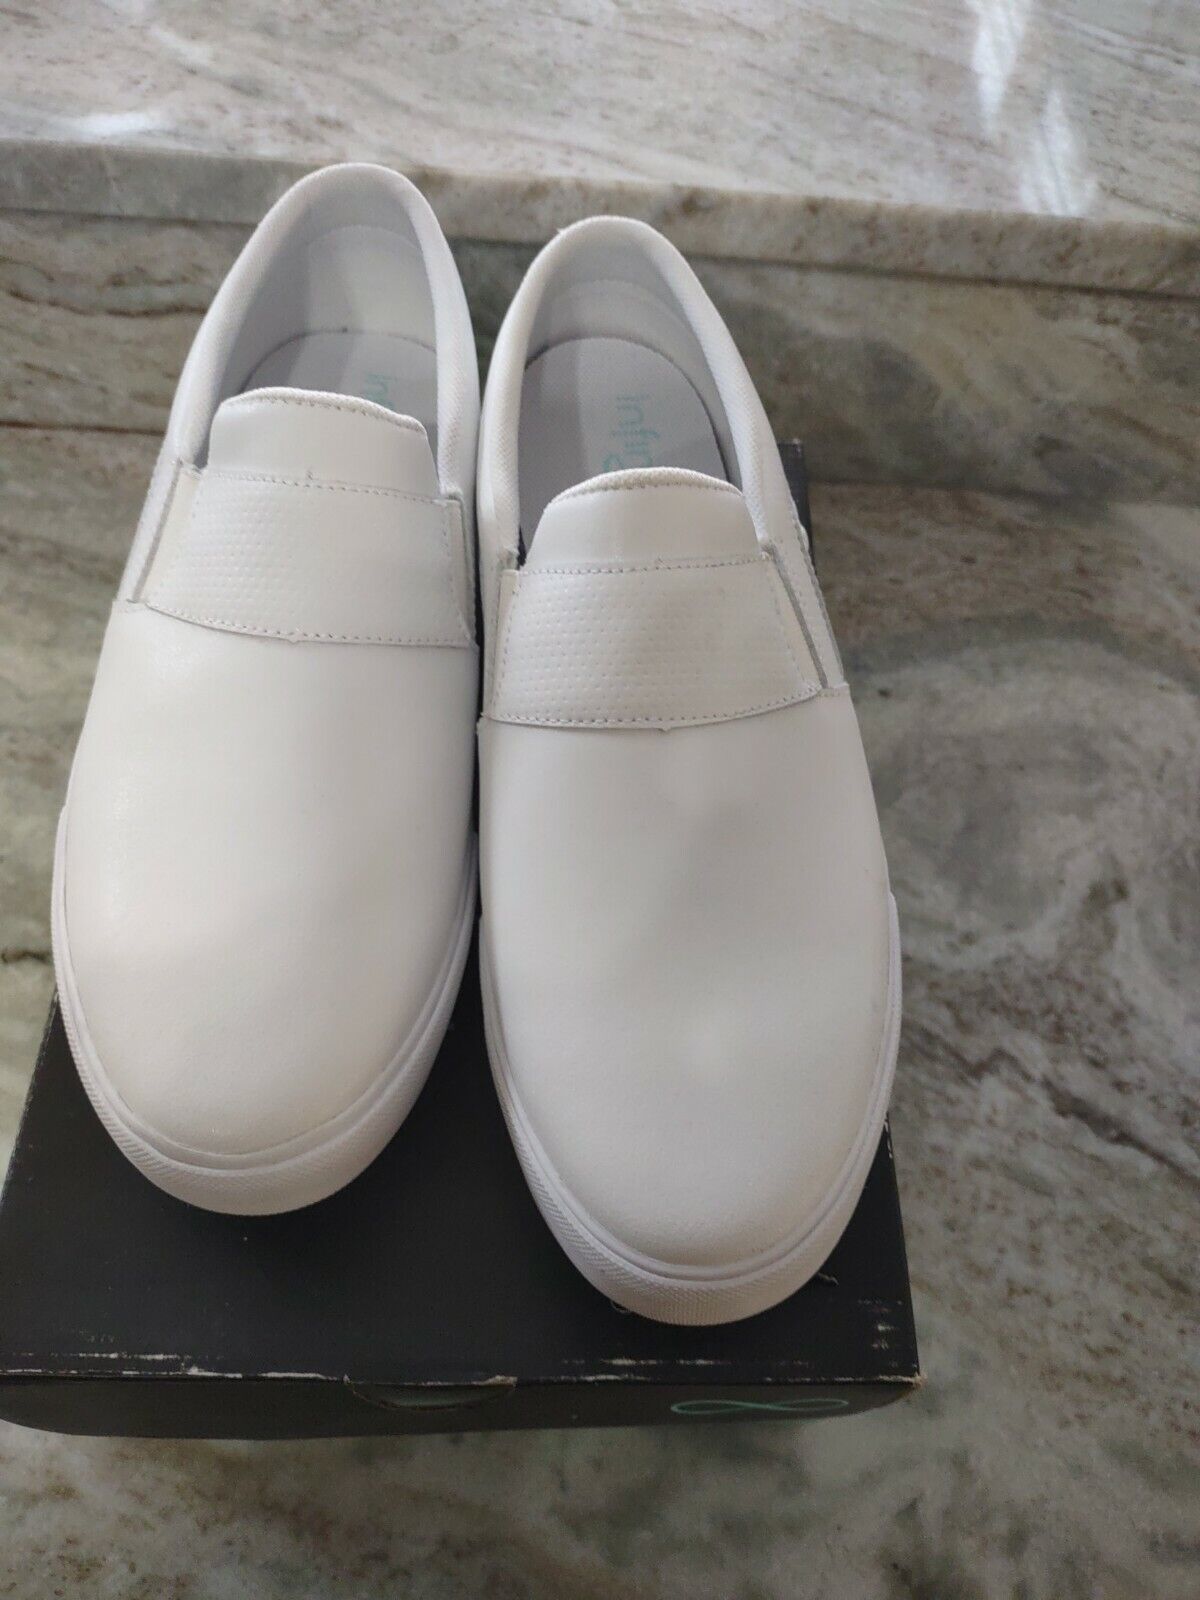 Primary image for Infinity Nursing Shoes Size 9.5 Slip Resistant floor model